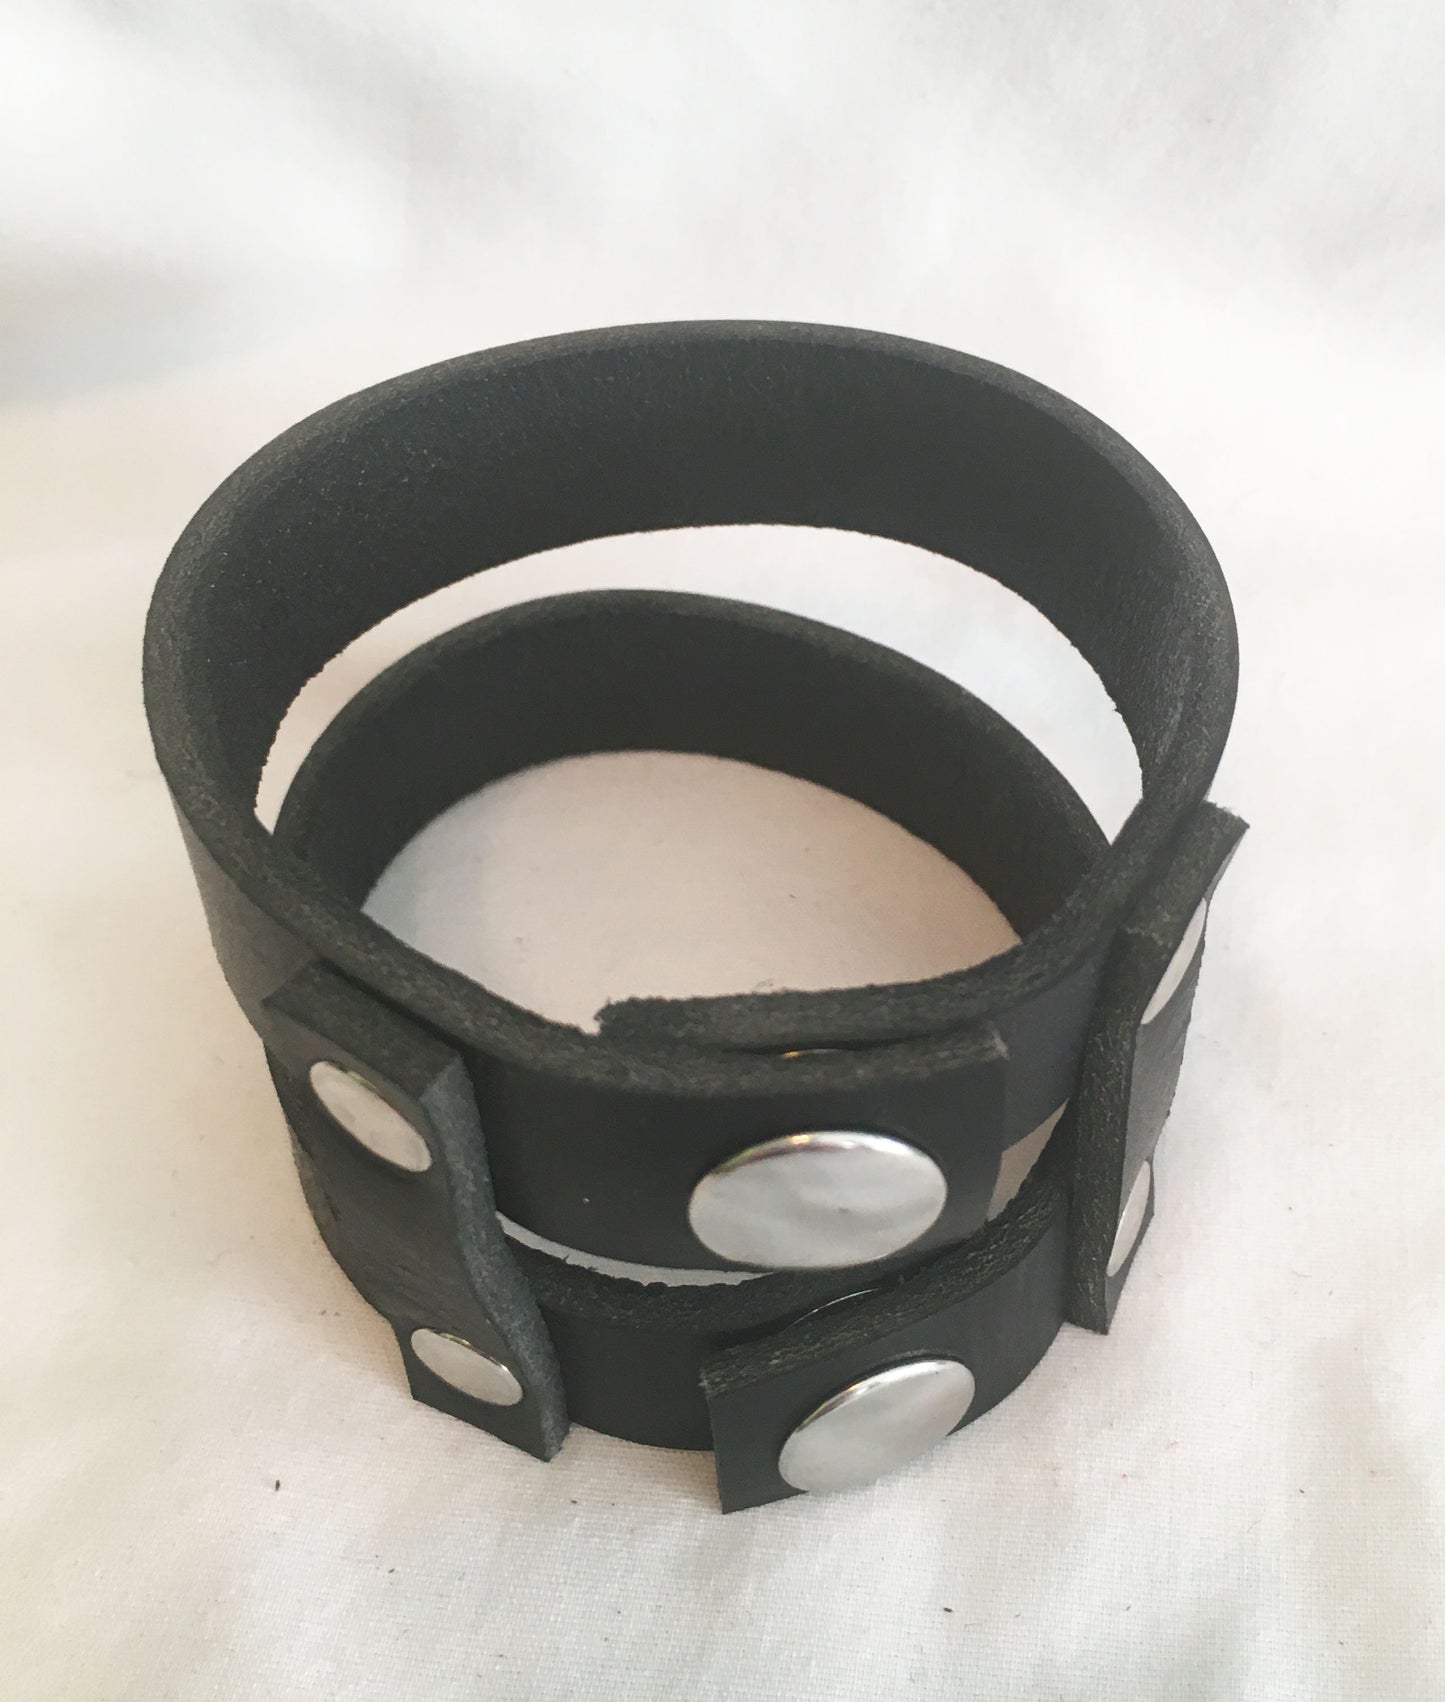 Hand Cuffs - Double Duty Cuffs - Black Leather Restraints